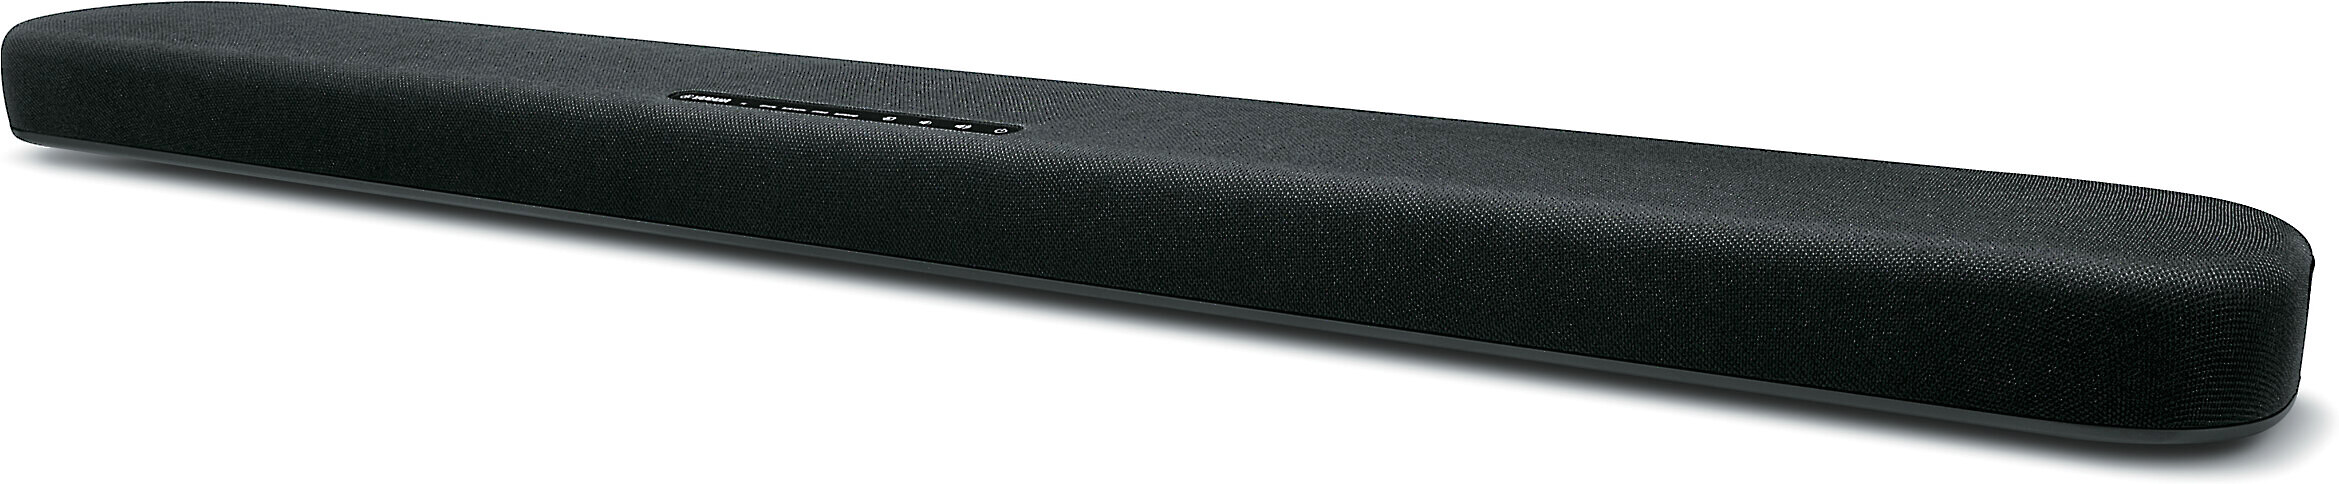 Sound Bars - Audio & Visual - Products - Yamaha USA